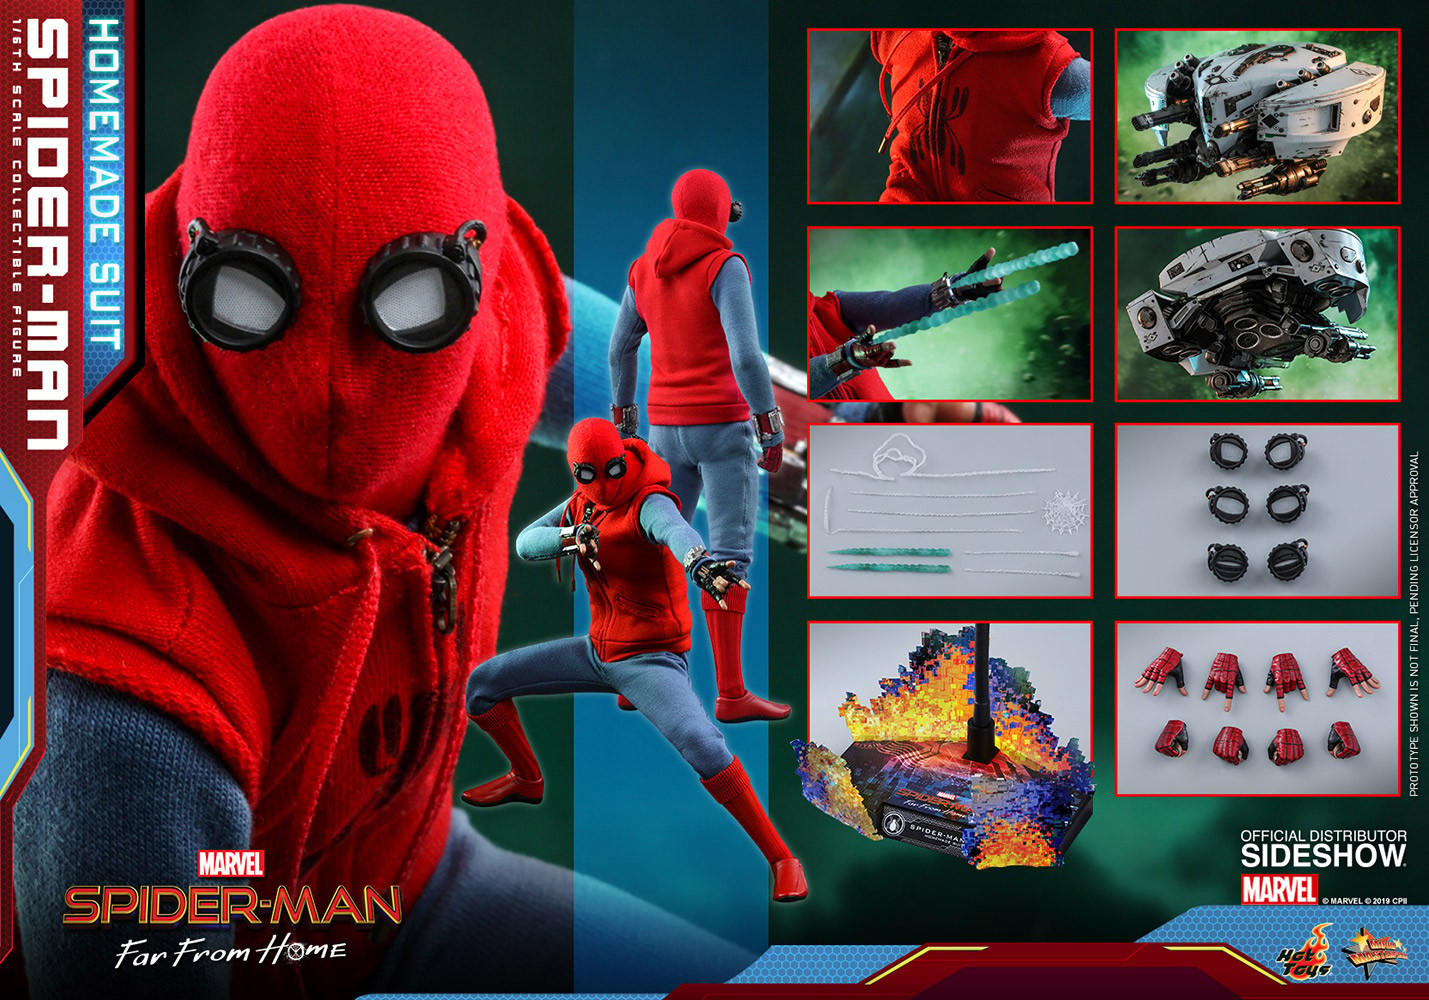 Spider-Man (Homemade Suit)